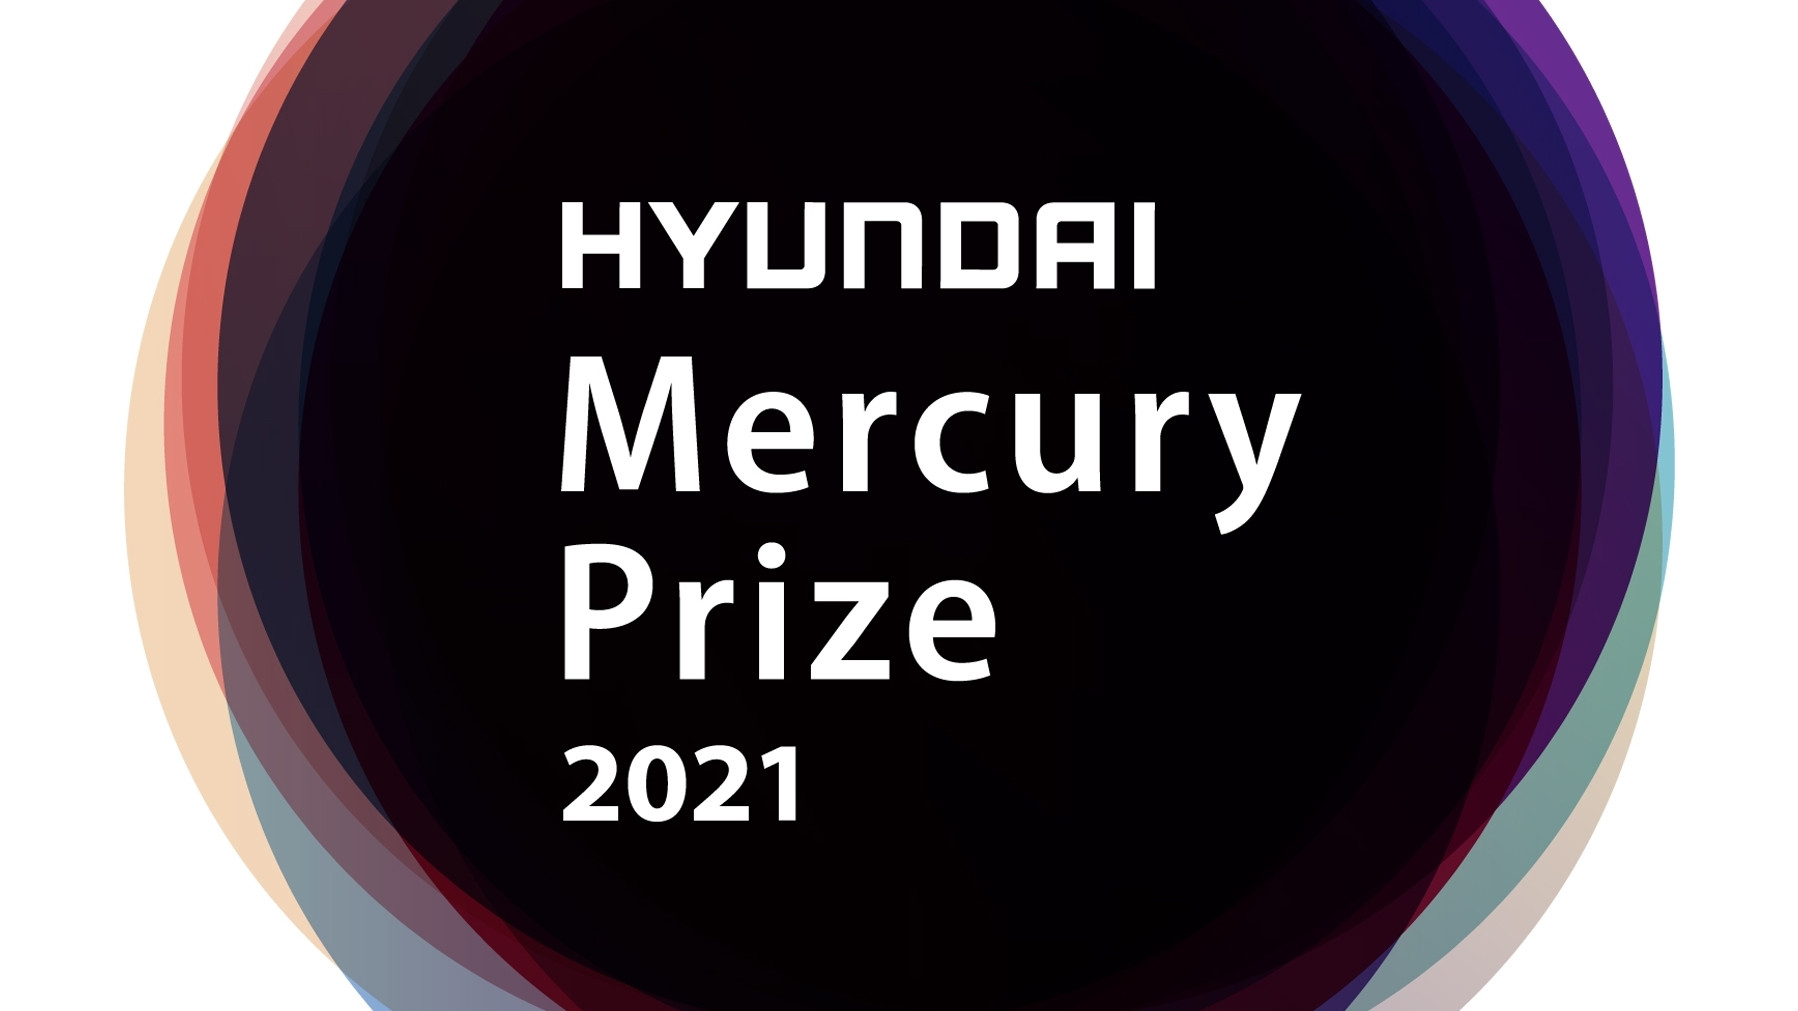 Mercury prize logo